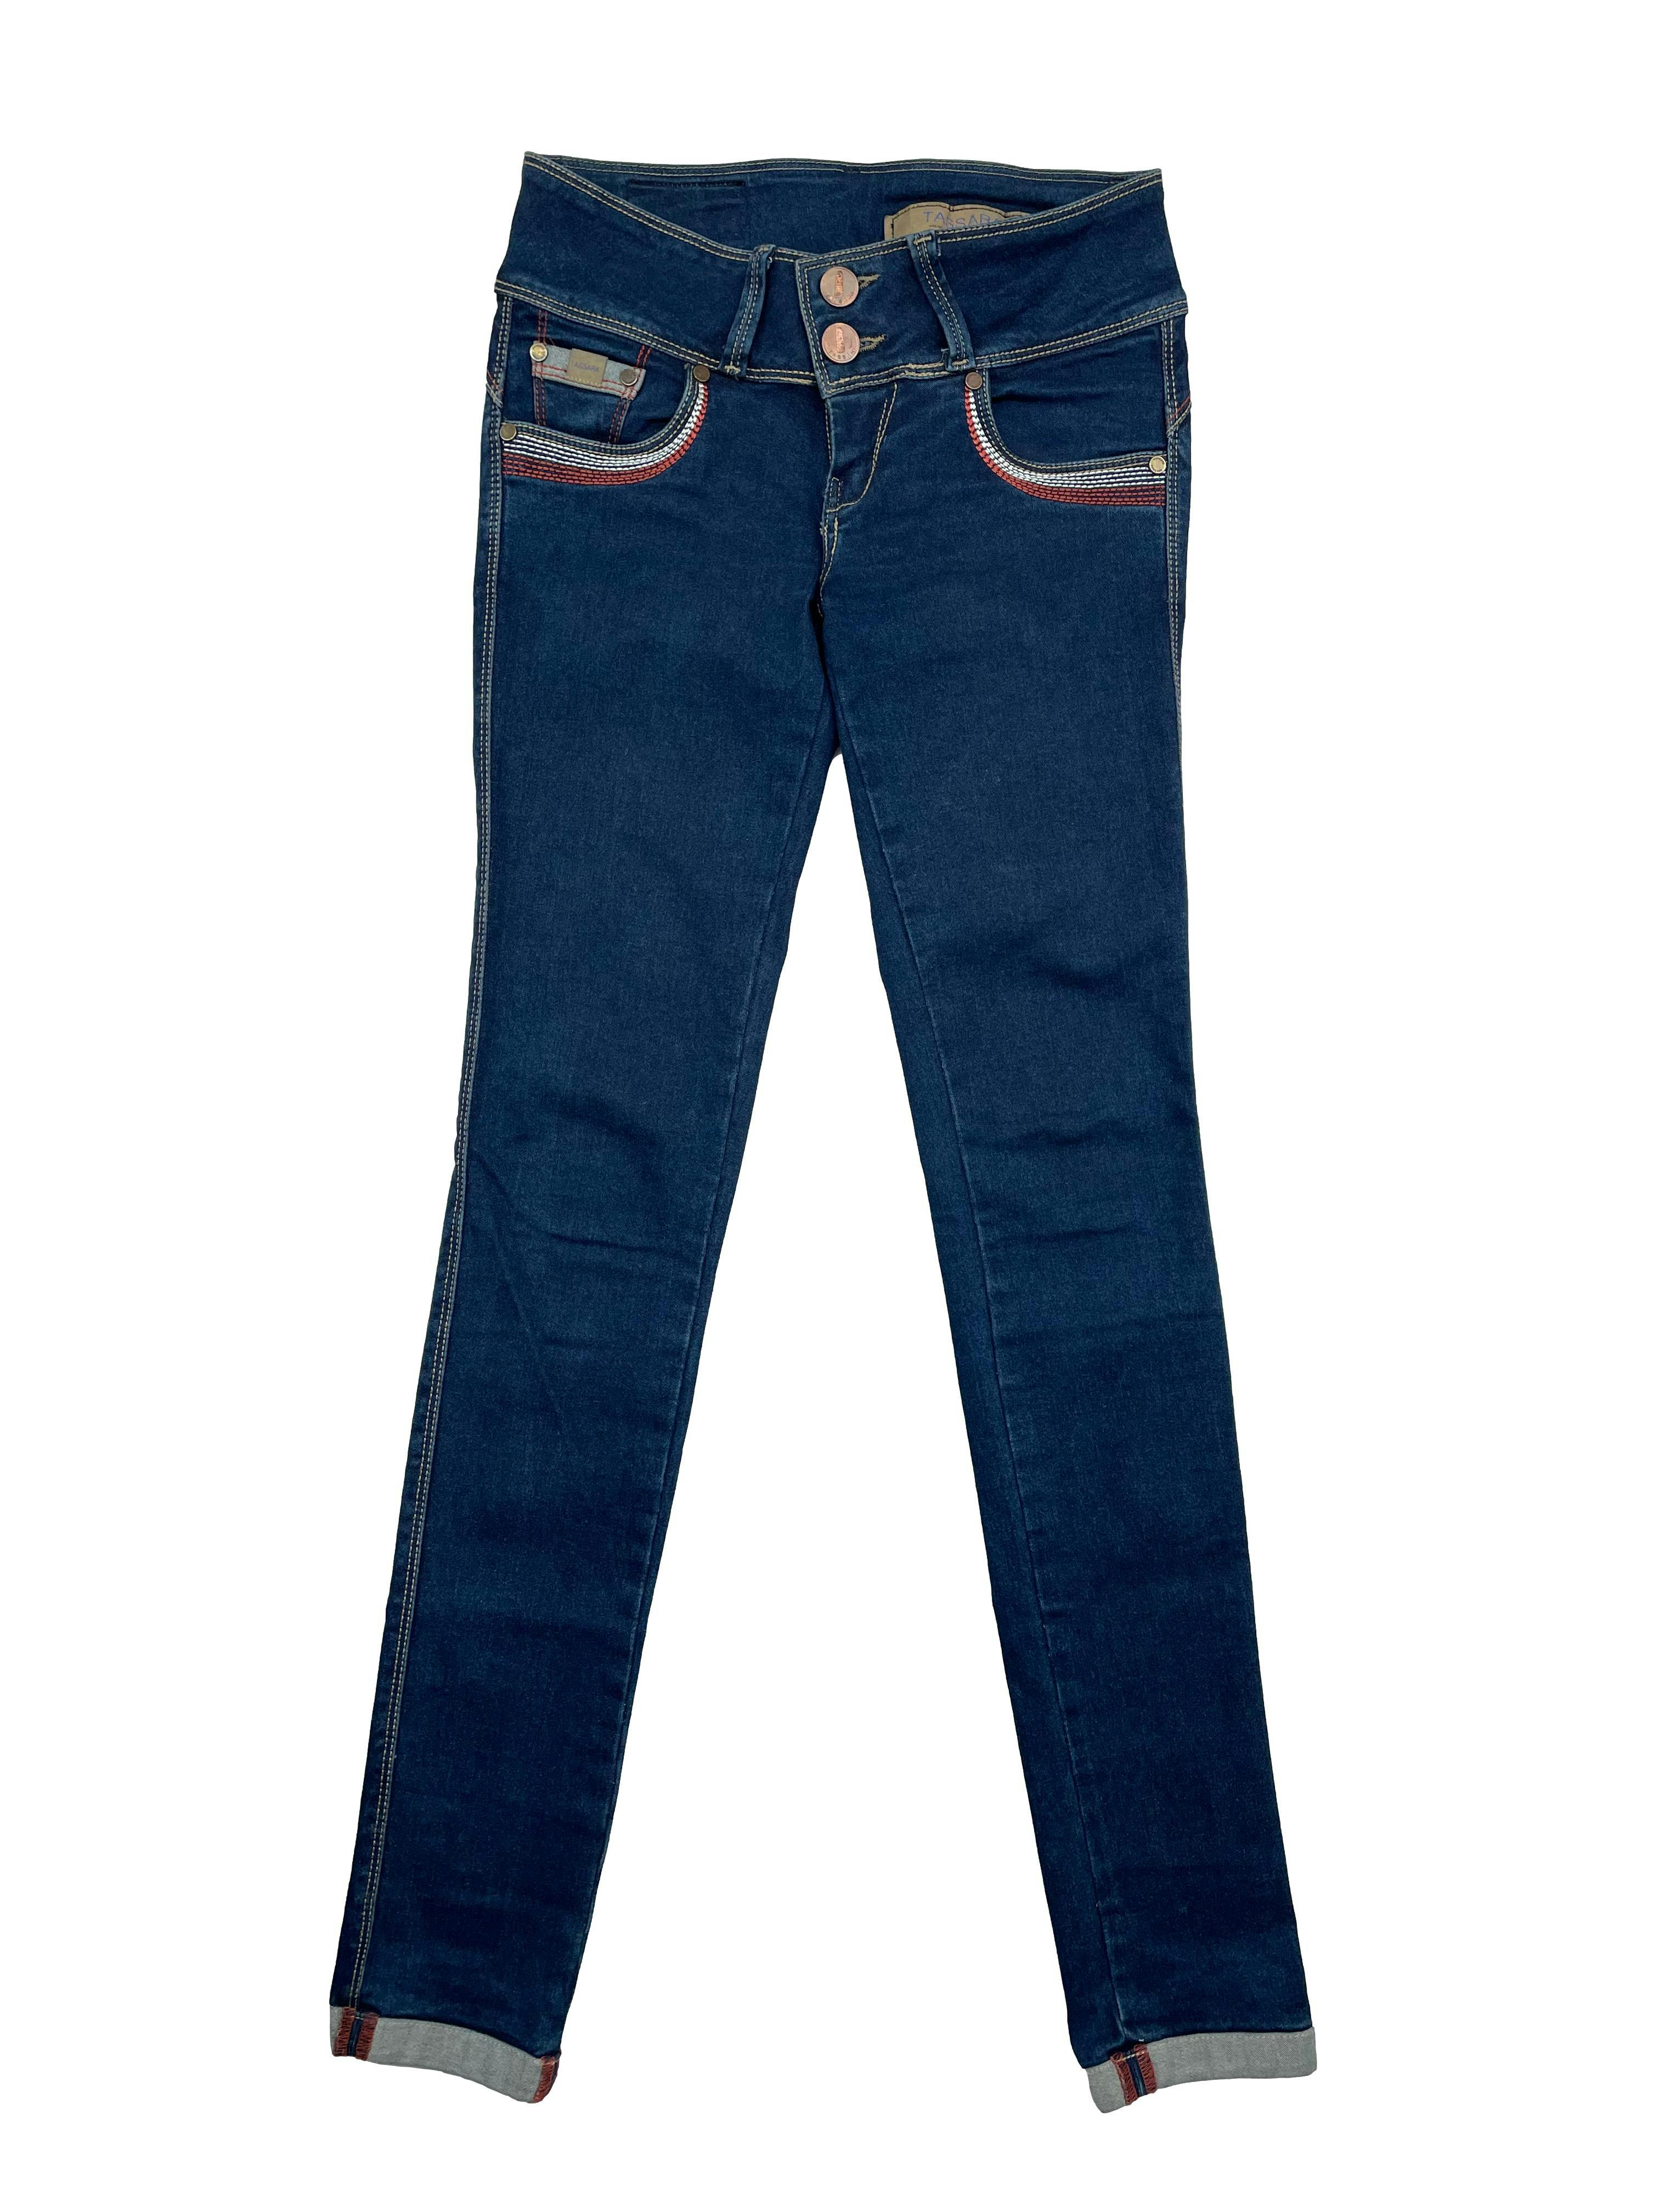 Skinny jean Tassara, costuras a contraste,3 bolsillos, pretina ancha con 2 botones, pinzas posteriore. Pretina 70cm, Tiro 18cm, Largo 98cm